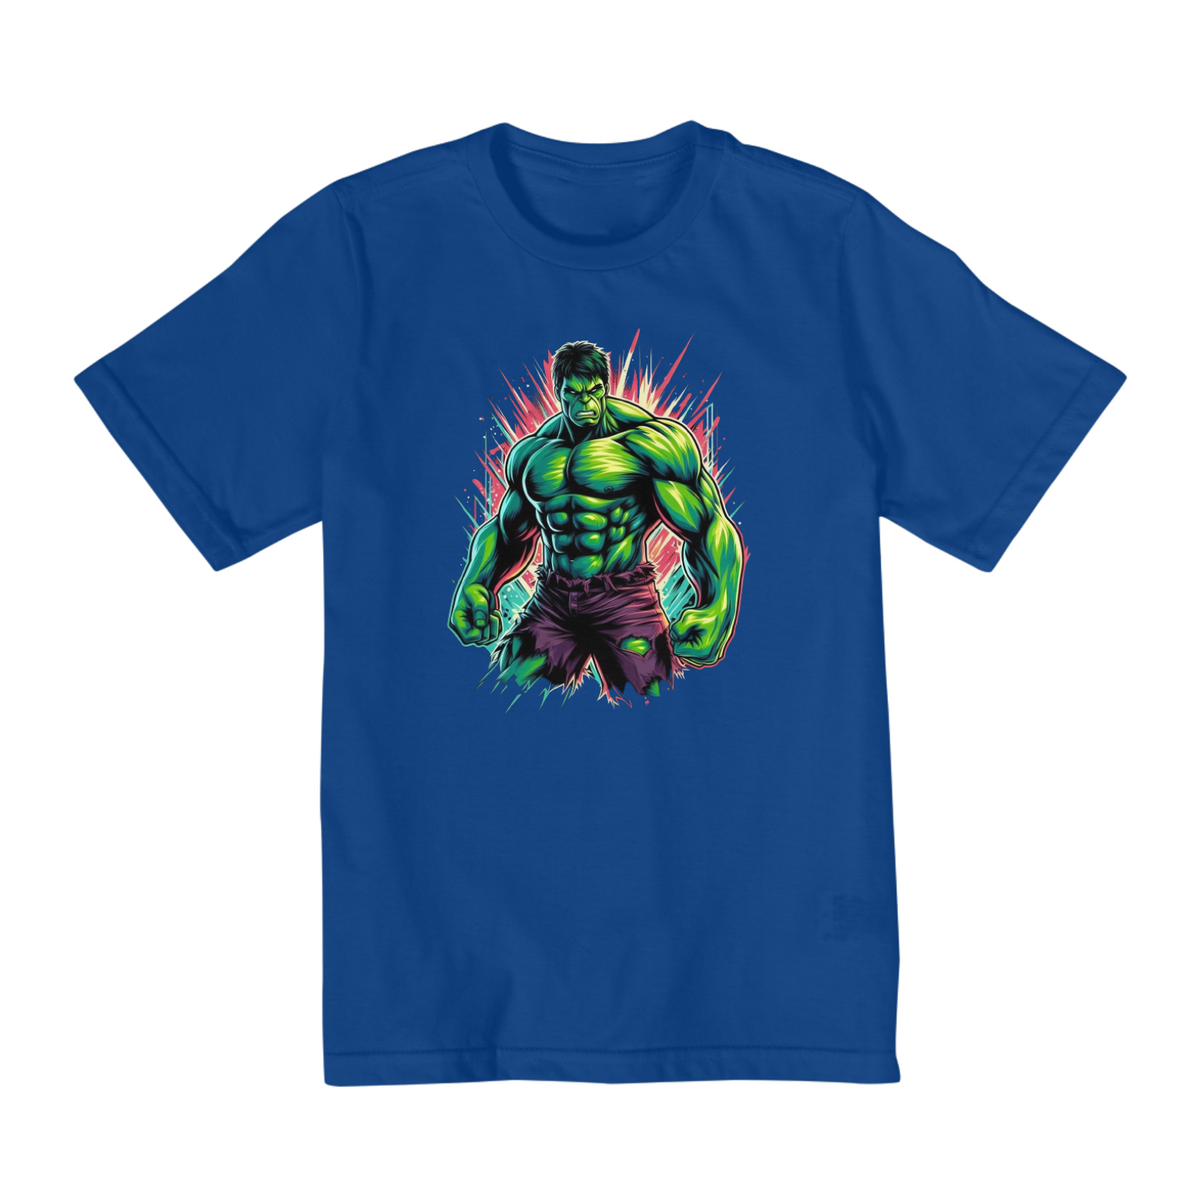 Nome do produto: Hulk Smash: A Lenda Continua